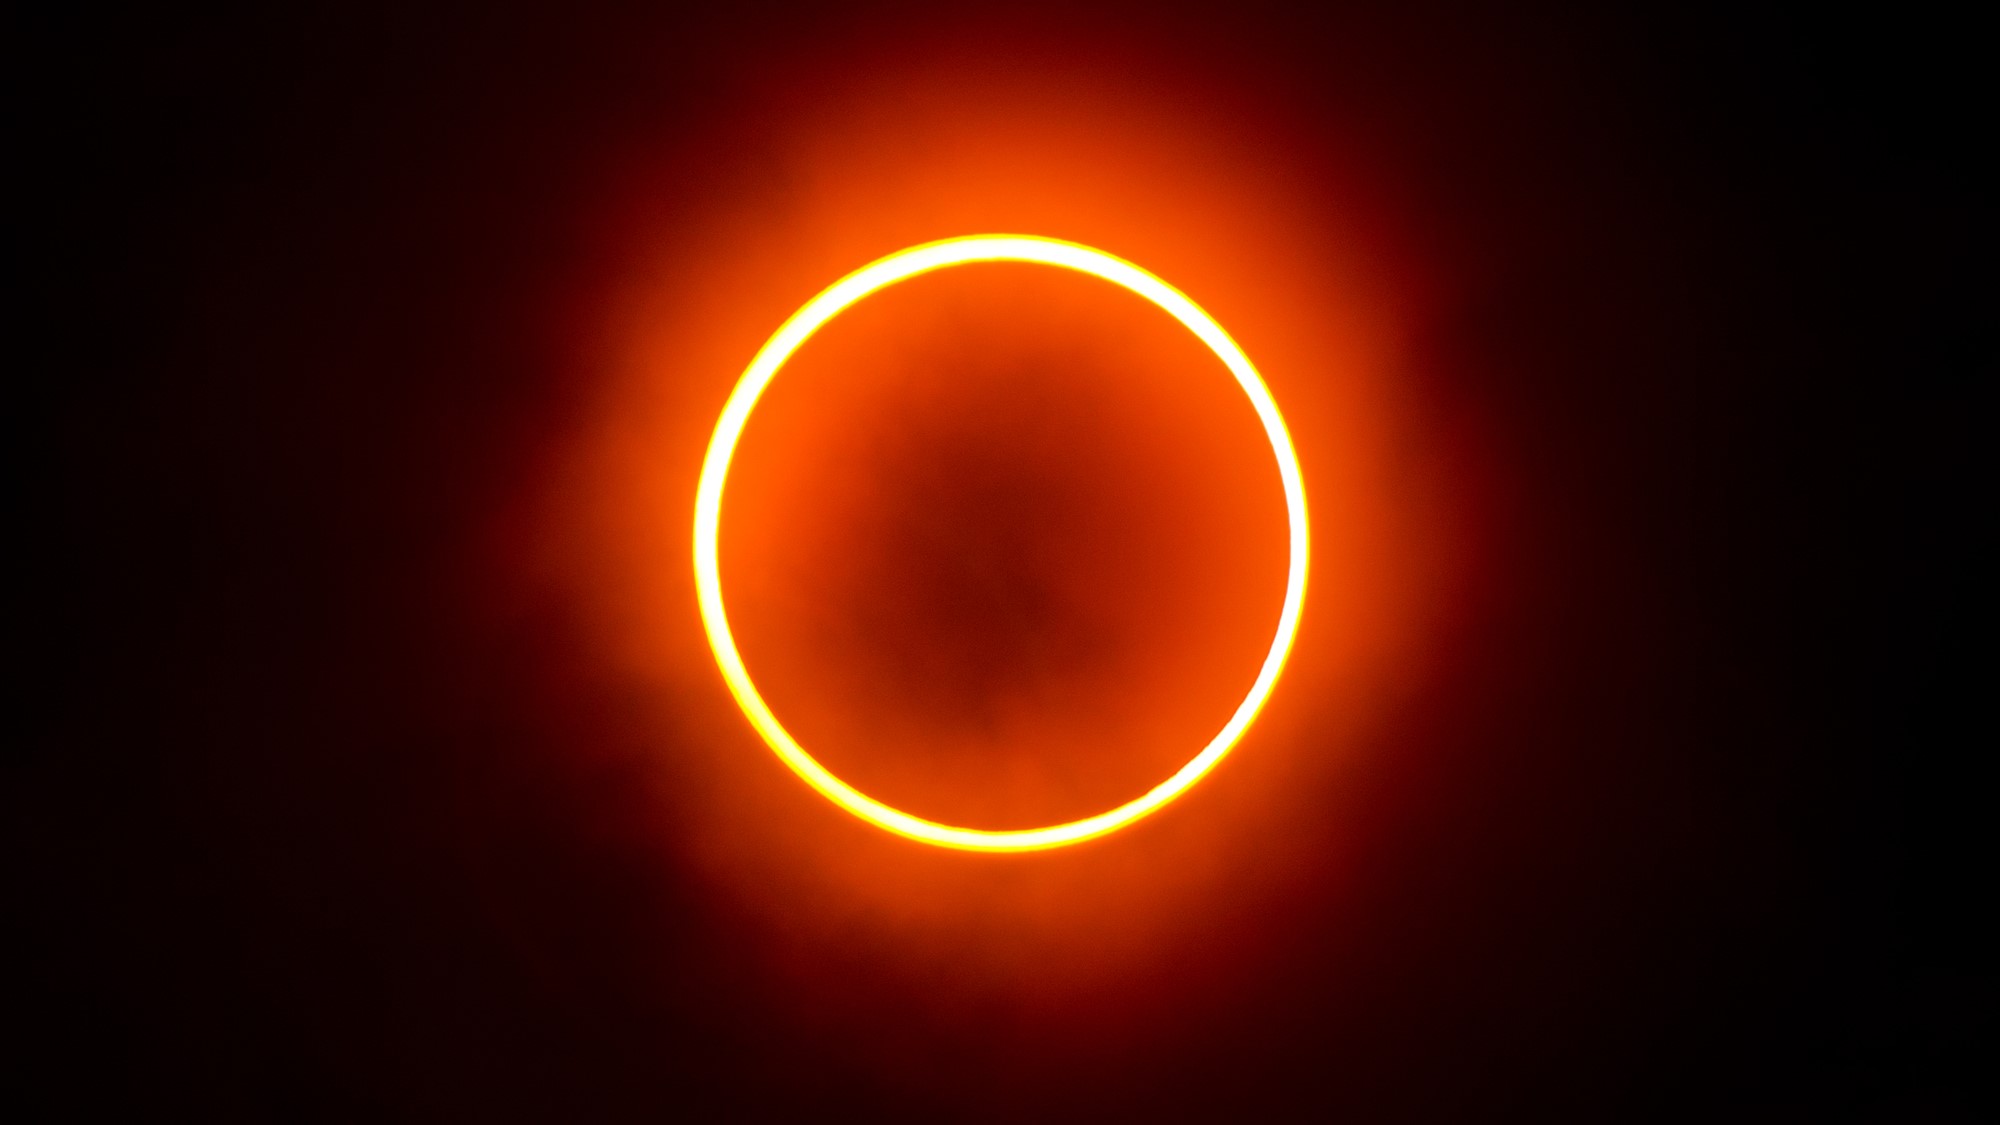 An orange ring around the dark moon eclipsing the sun.